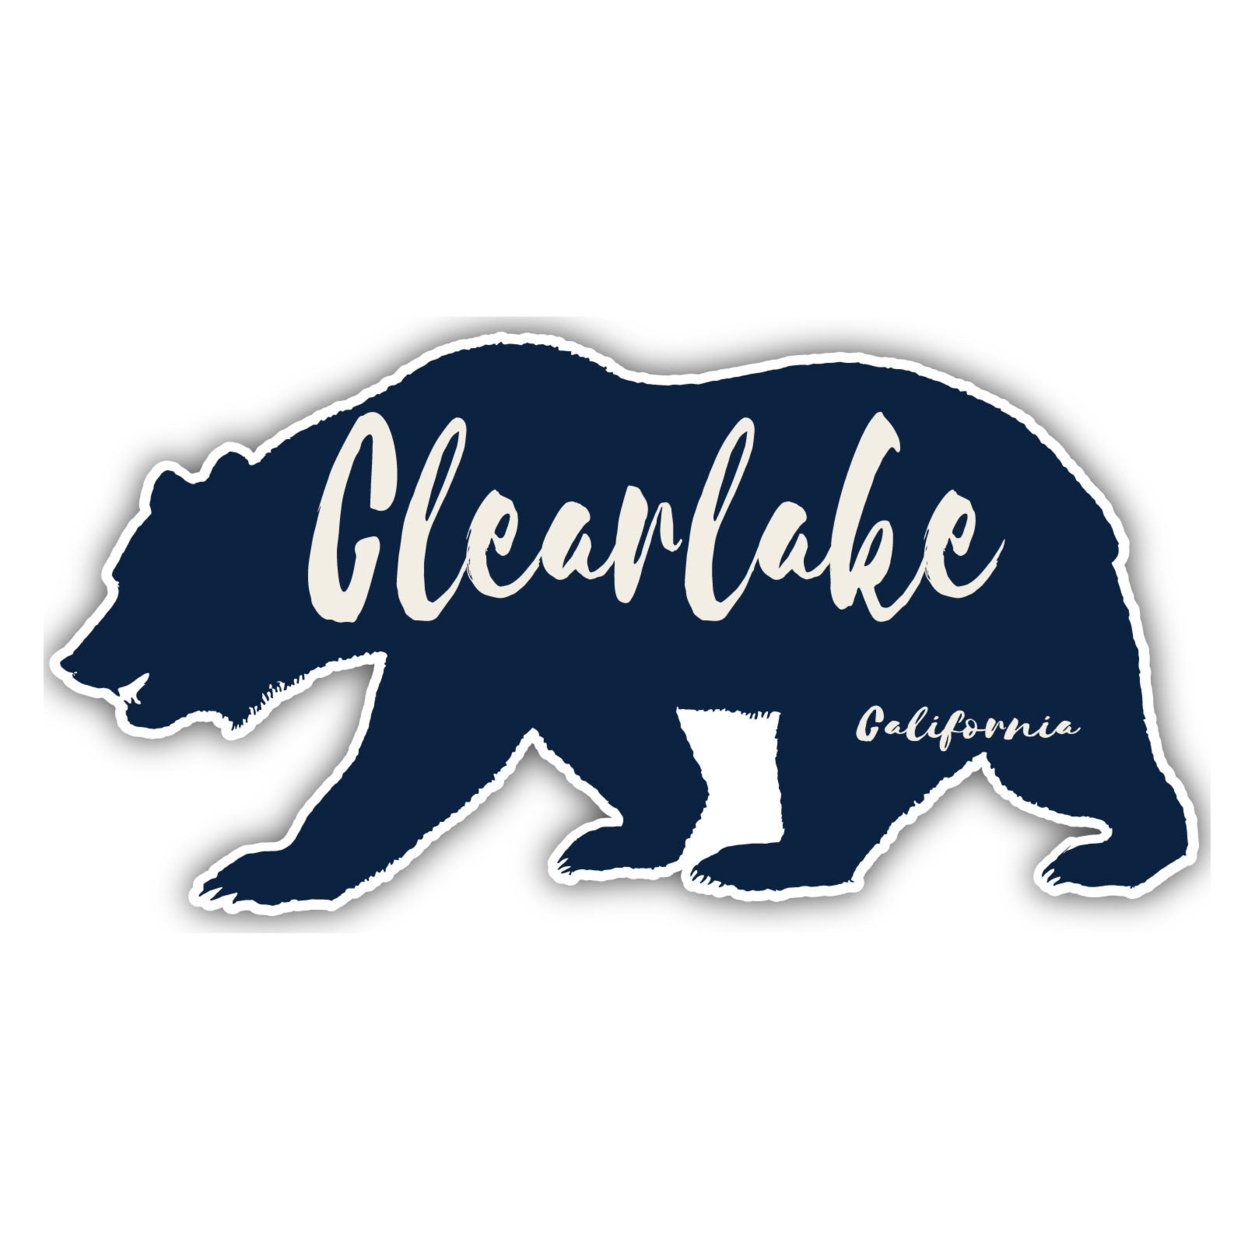 Clearlake California Souvenir Decorative Stickers (Choose Theme And Size) - Single Unit, 12-Inch, Bear